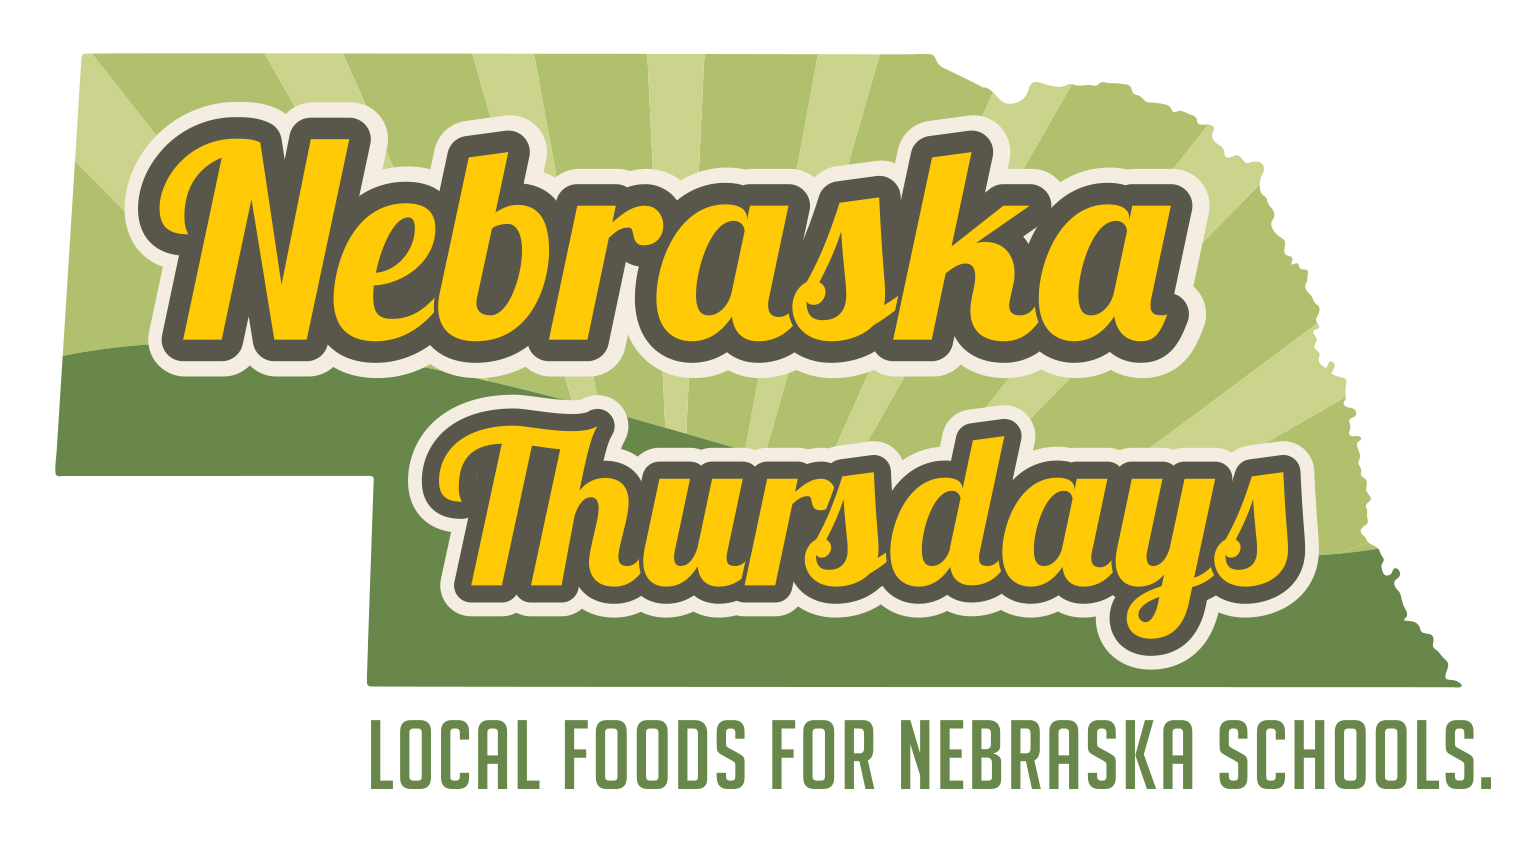 Nebraska Thursdays logo